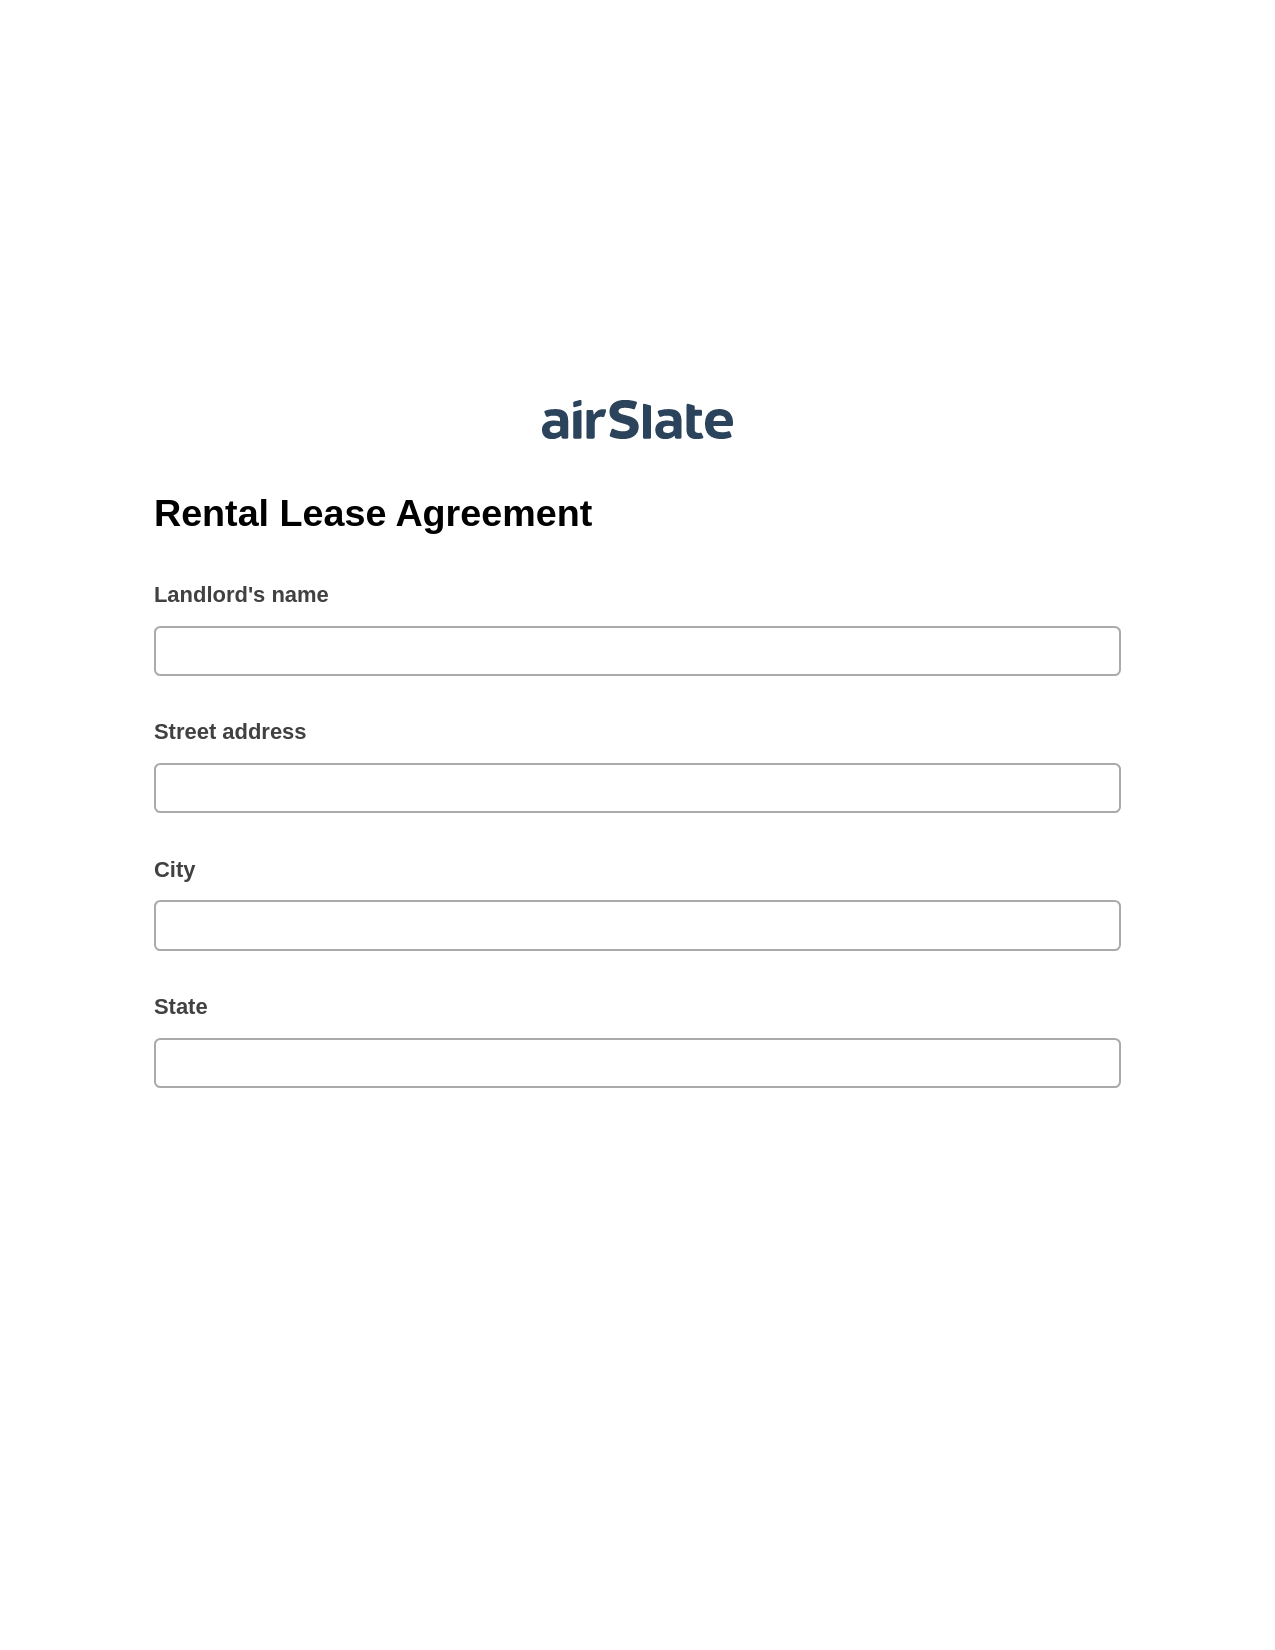 Rental Lease Agreement Pre-fill from CSV File Dropdown Options Bot, Webhook Bot, Webhook Postfinish Bot